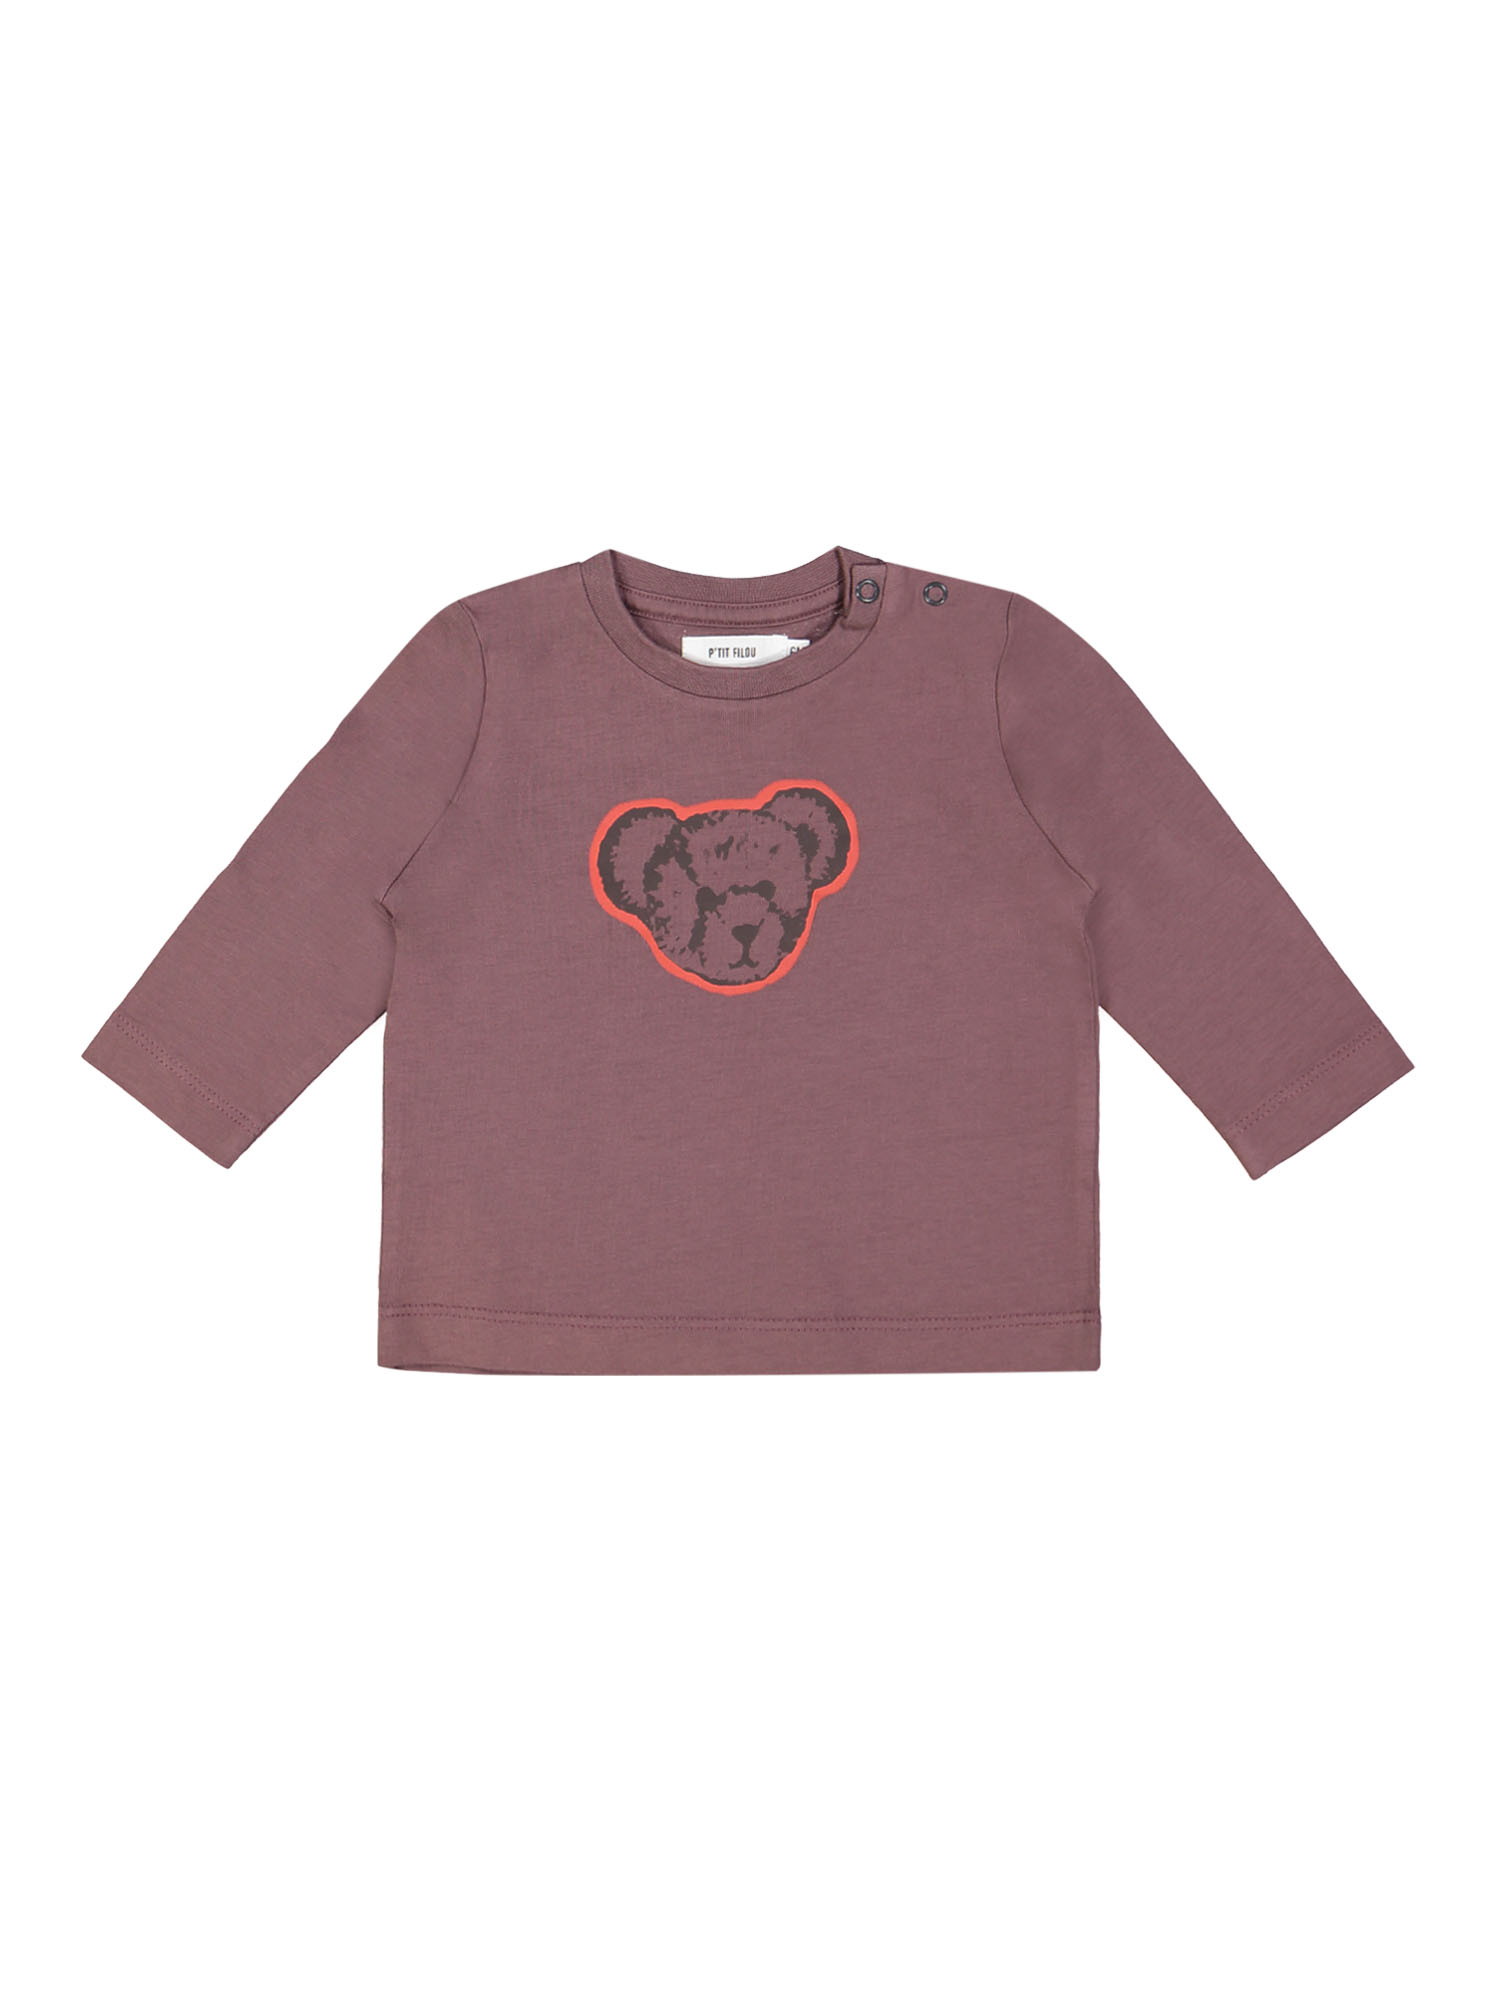 T-shirt teddy bear aubergine 03m